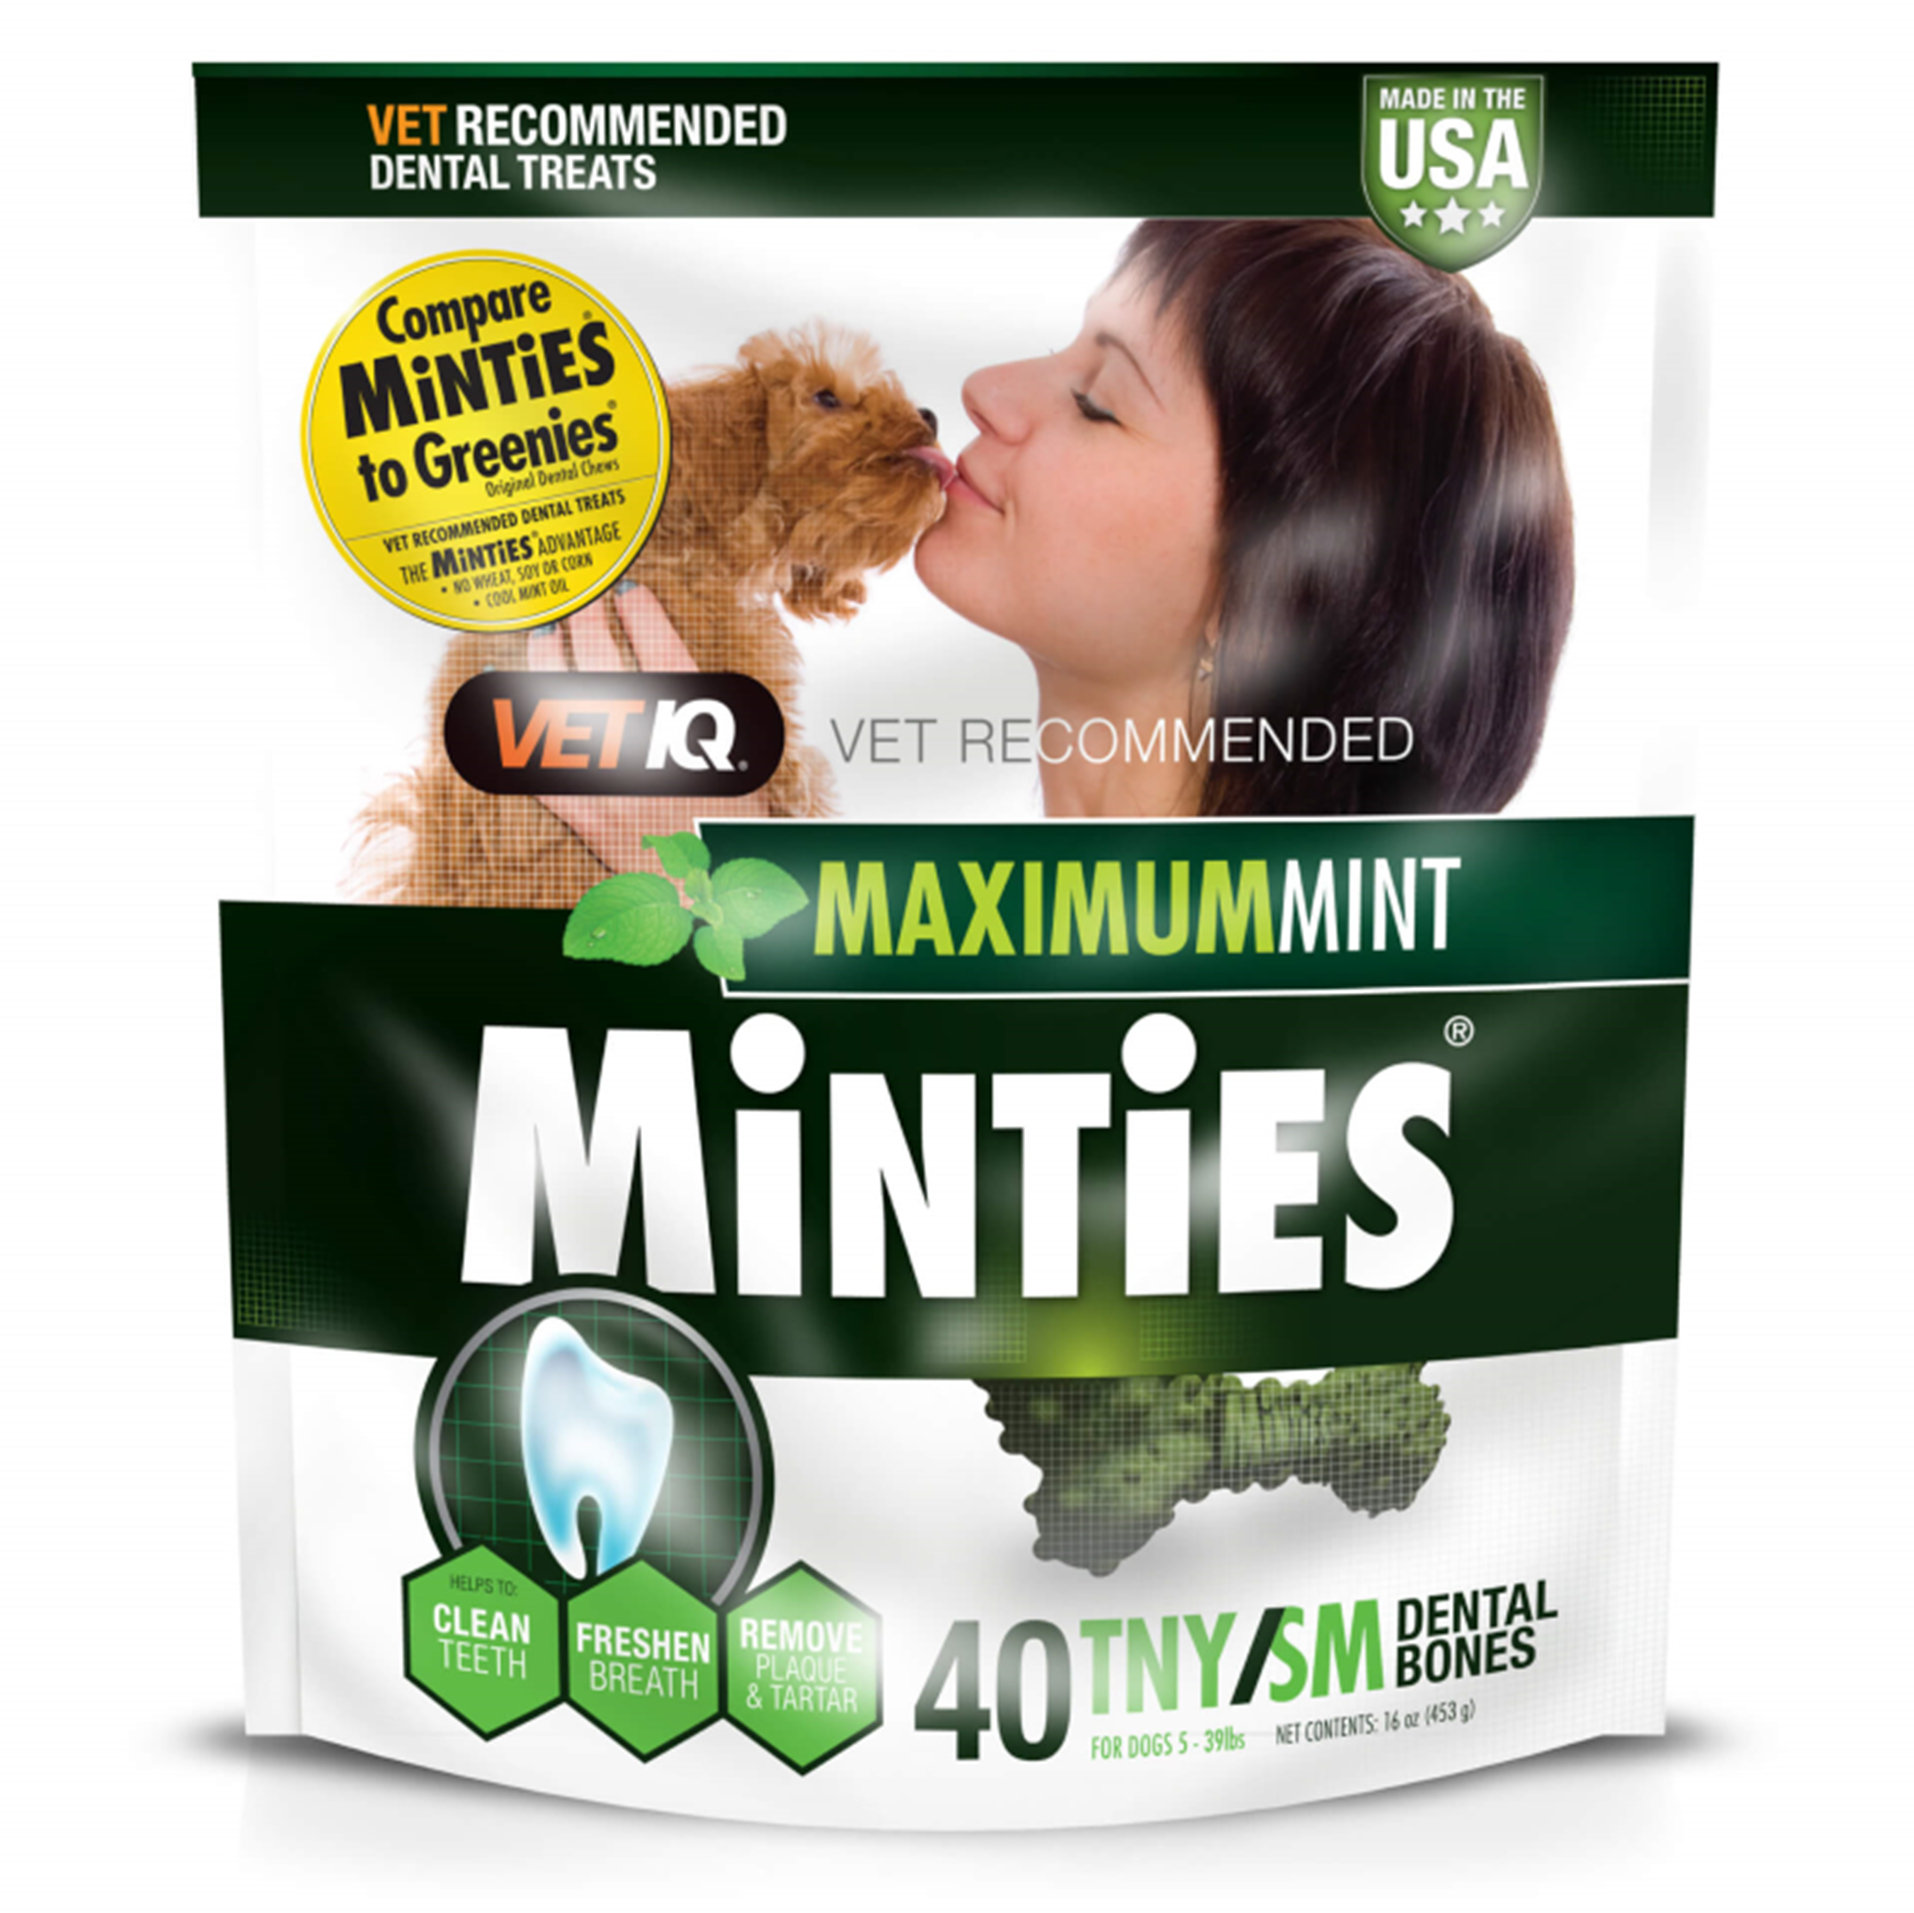 Minties Dental Bone Small 40 count